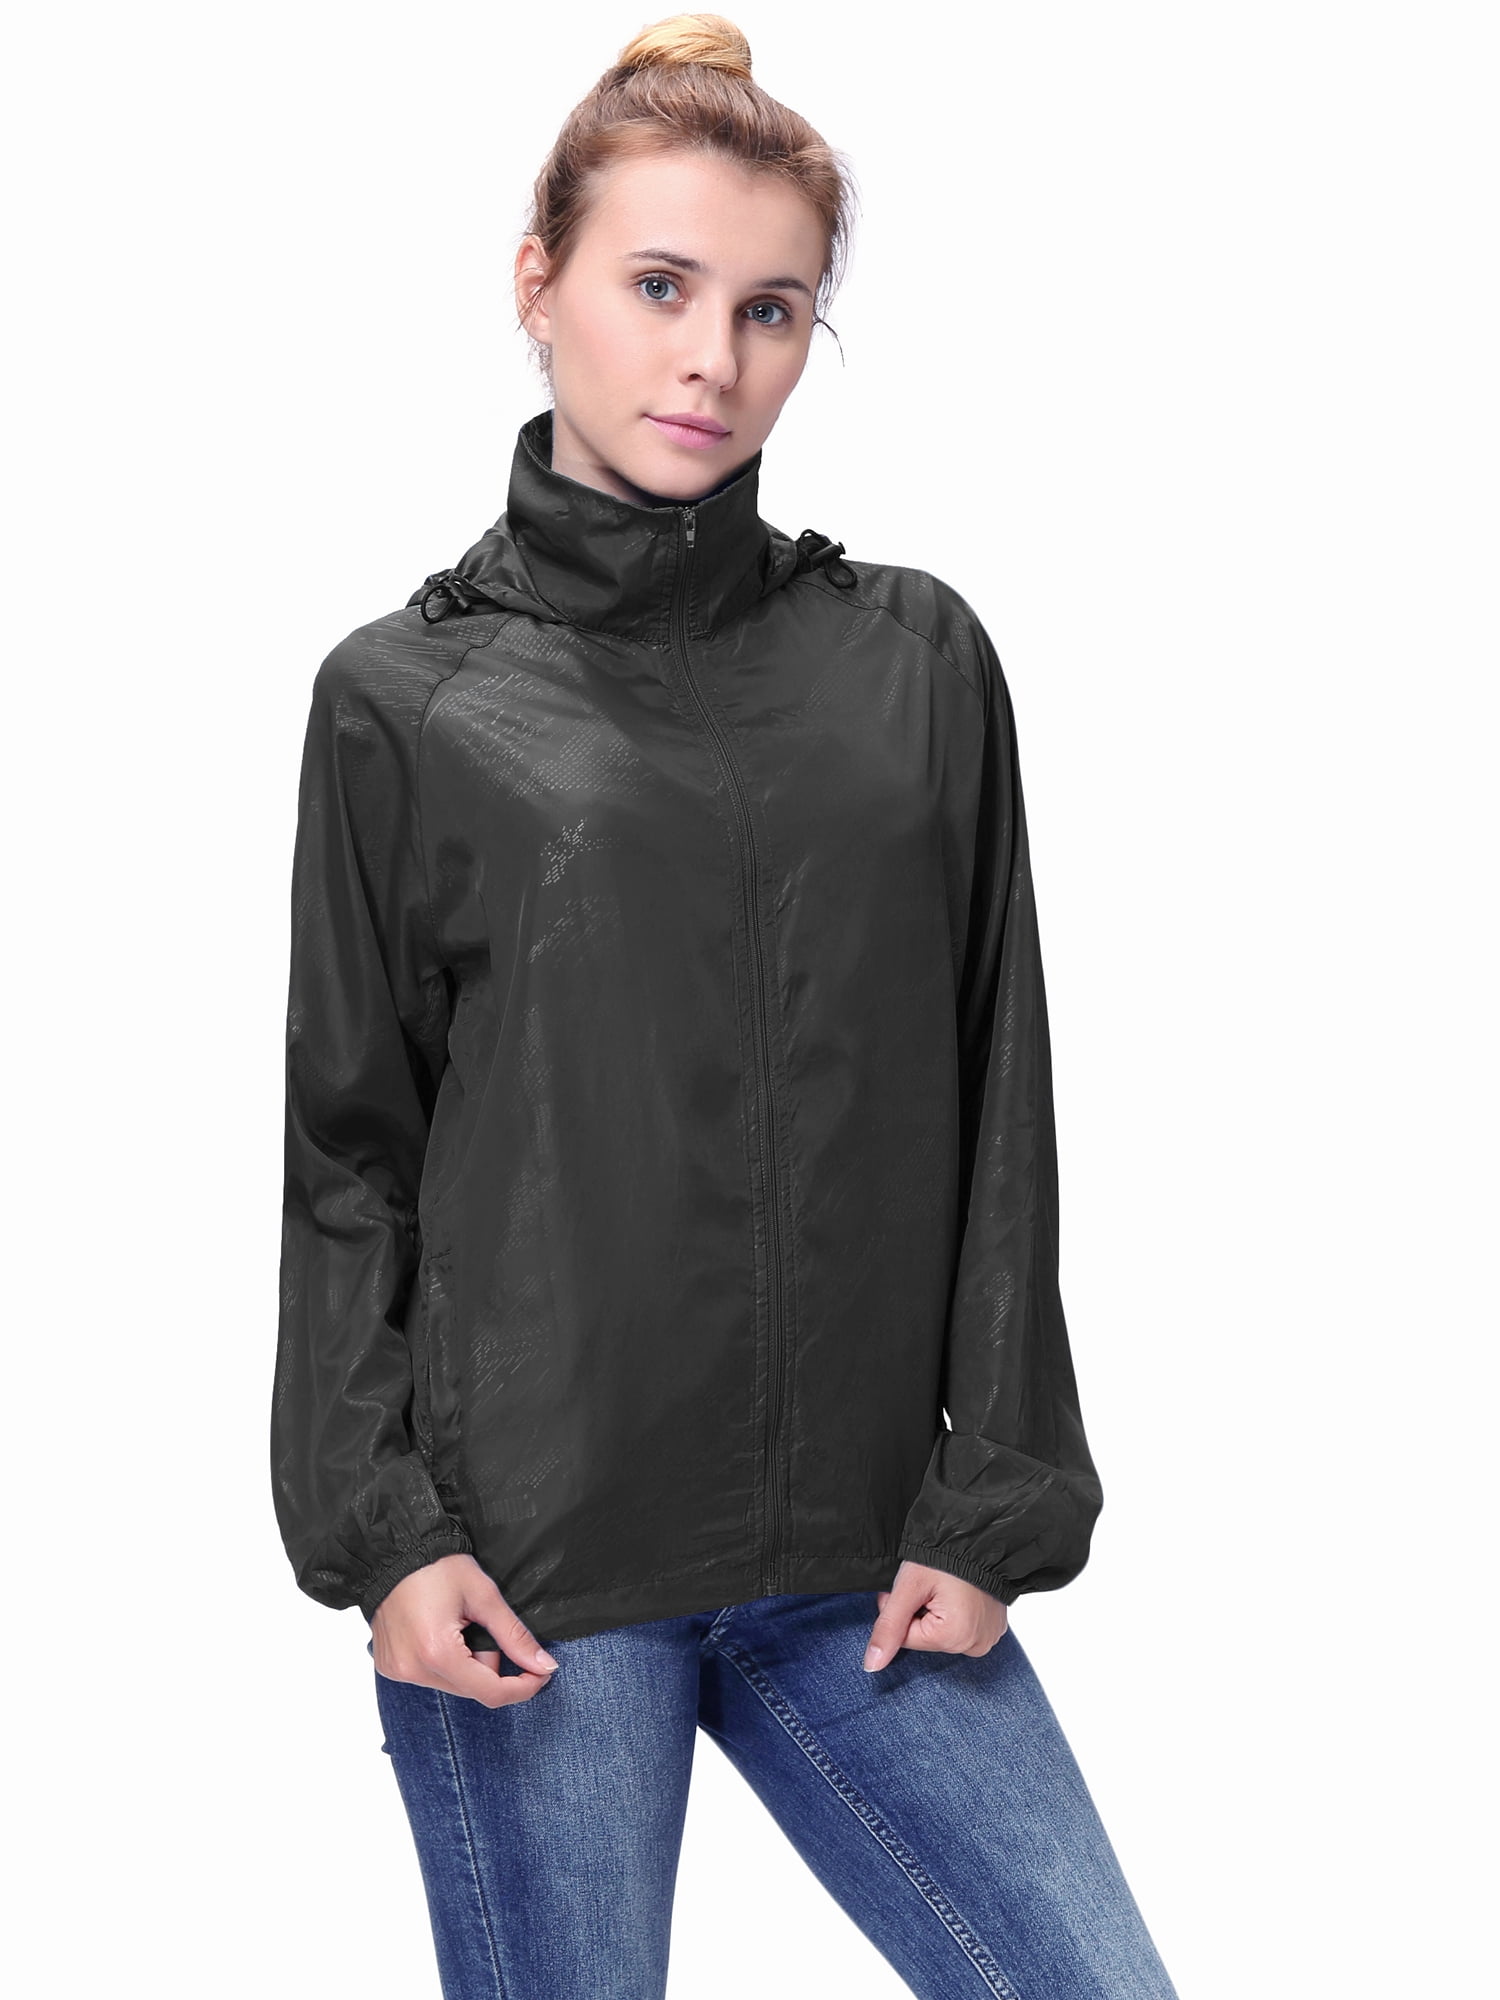 Men's Breathable Raincoat Jacket Hooded Coat Zipper Quick Dry Wind Breaker Upper 